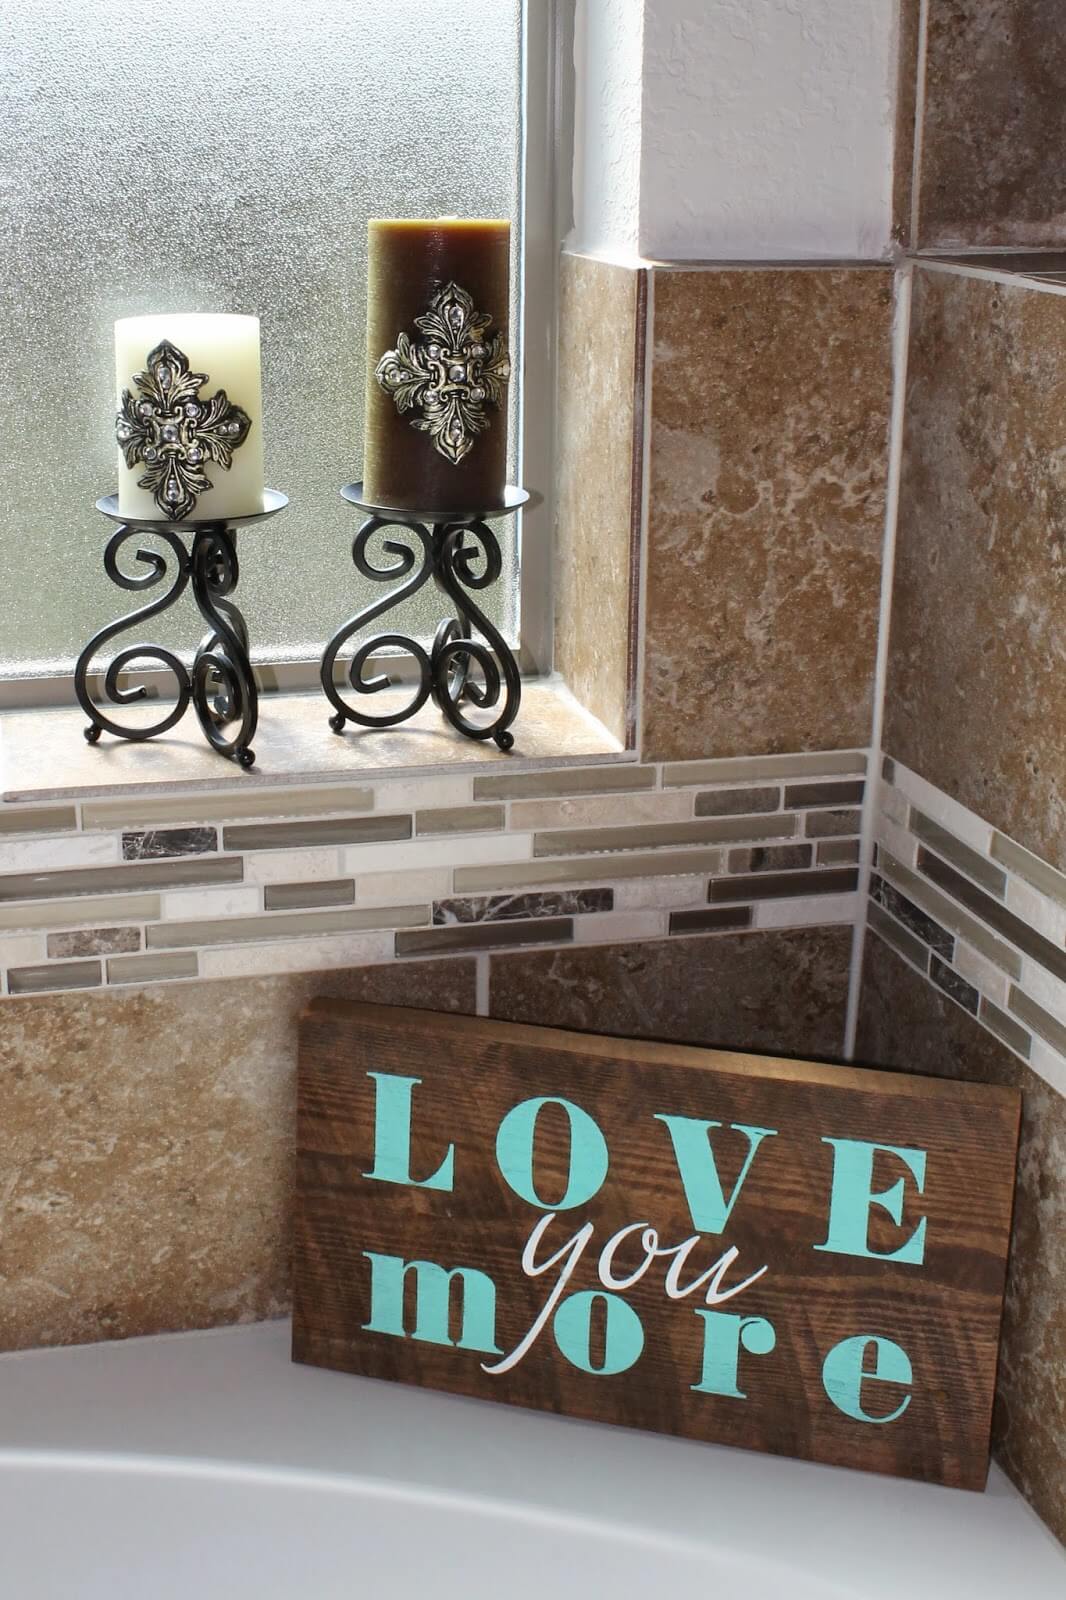 Happy Relationship Reminder for Your Bathroom Nook